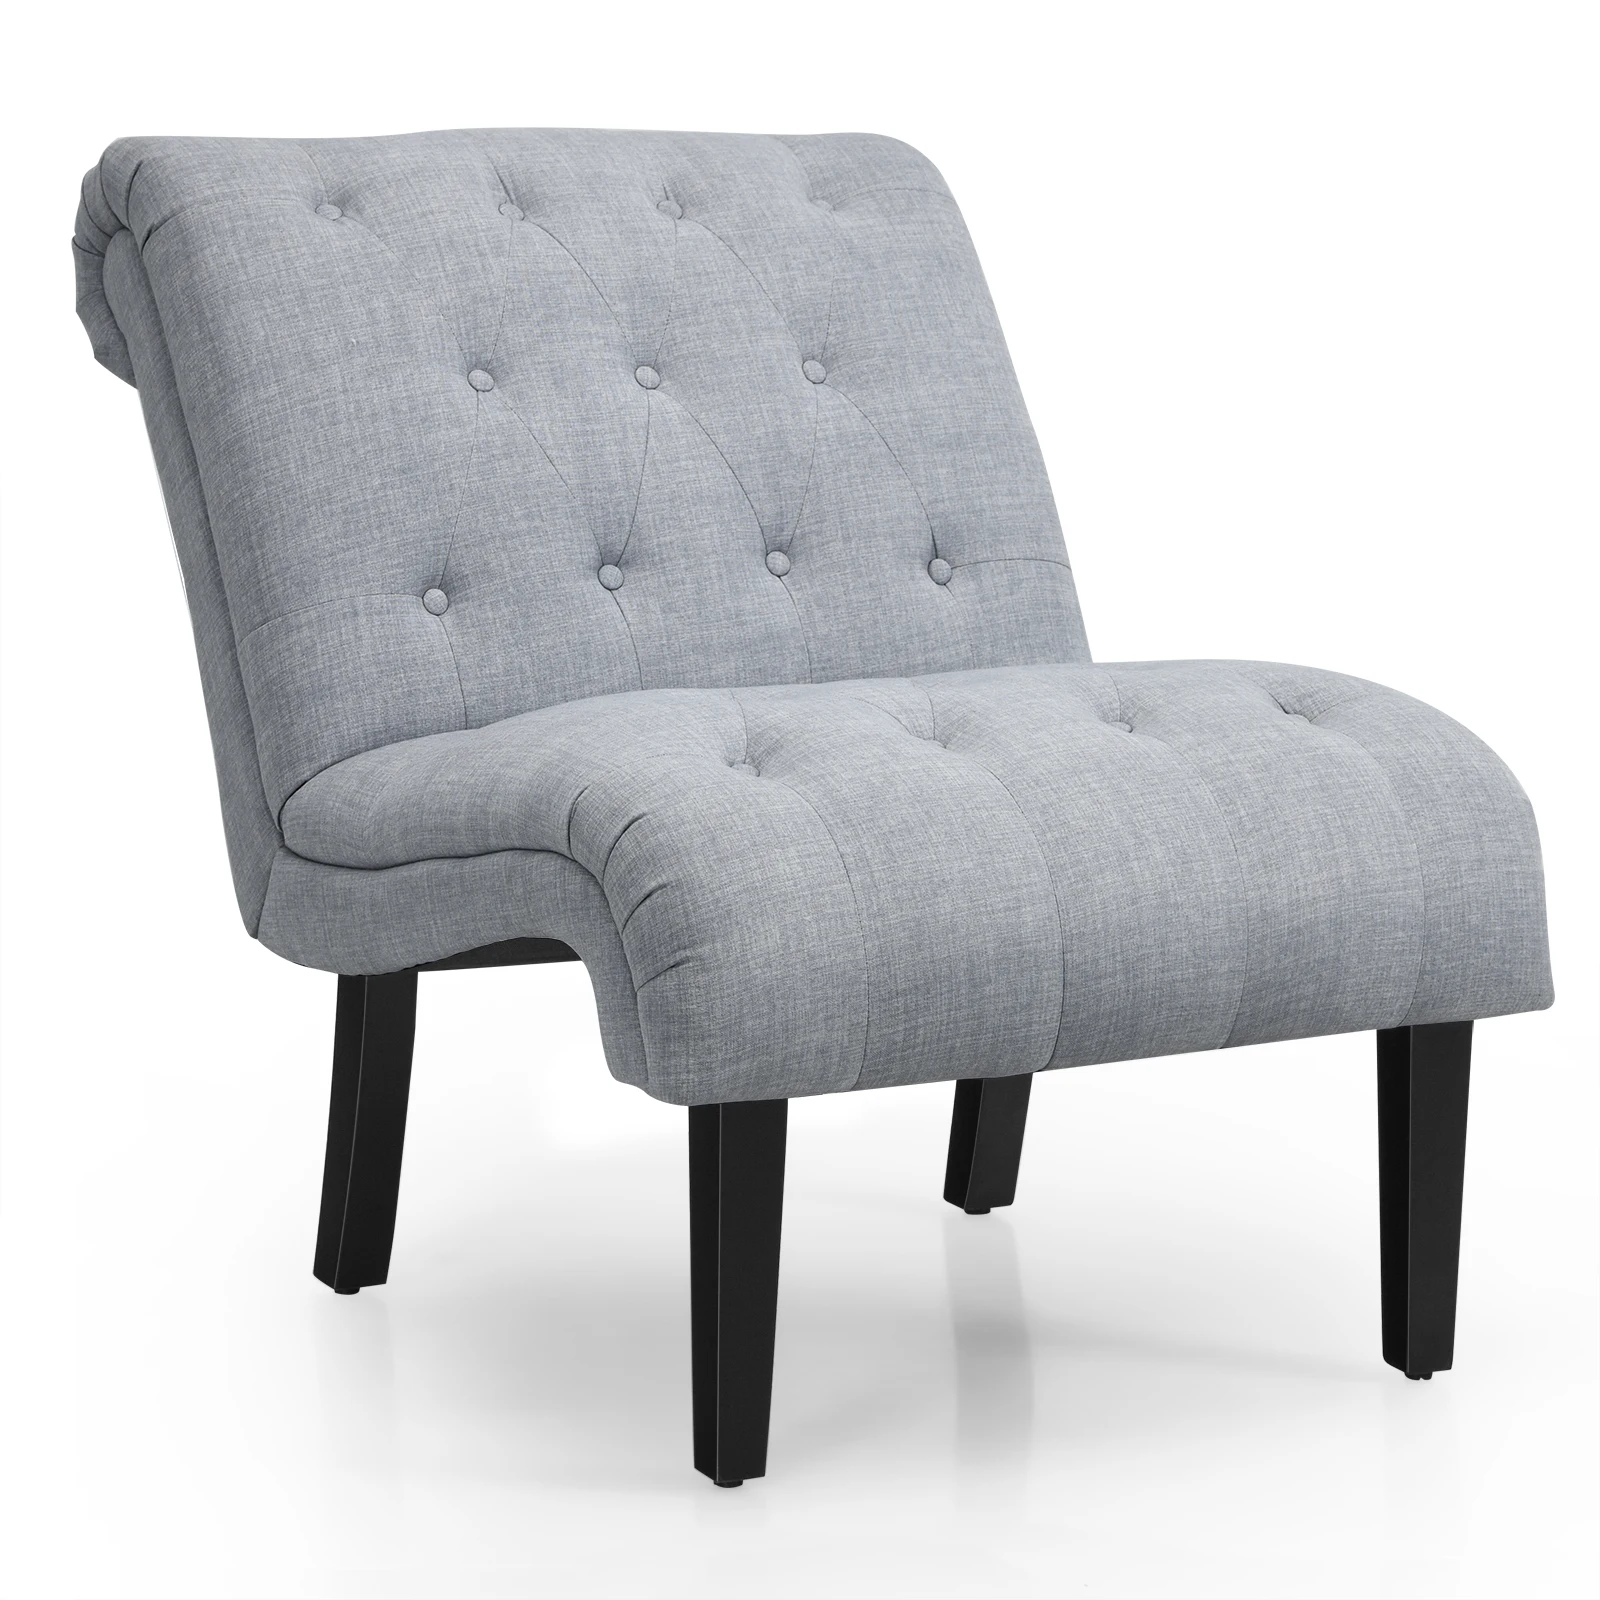 

Giantex Armless Accent Chair Upholstered Tufted Lounge Chair Wood Leg Light Grey HU10004SL